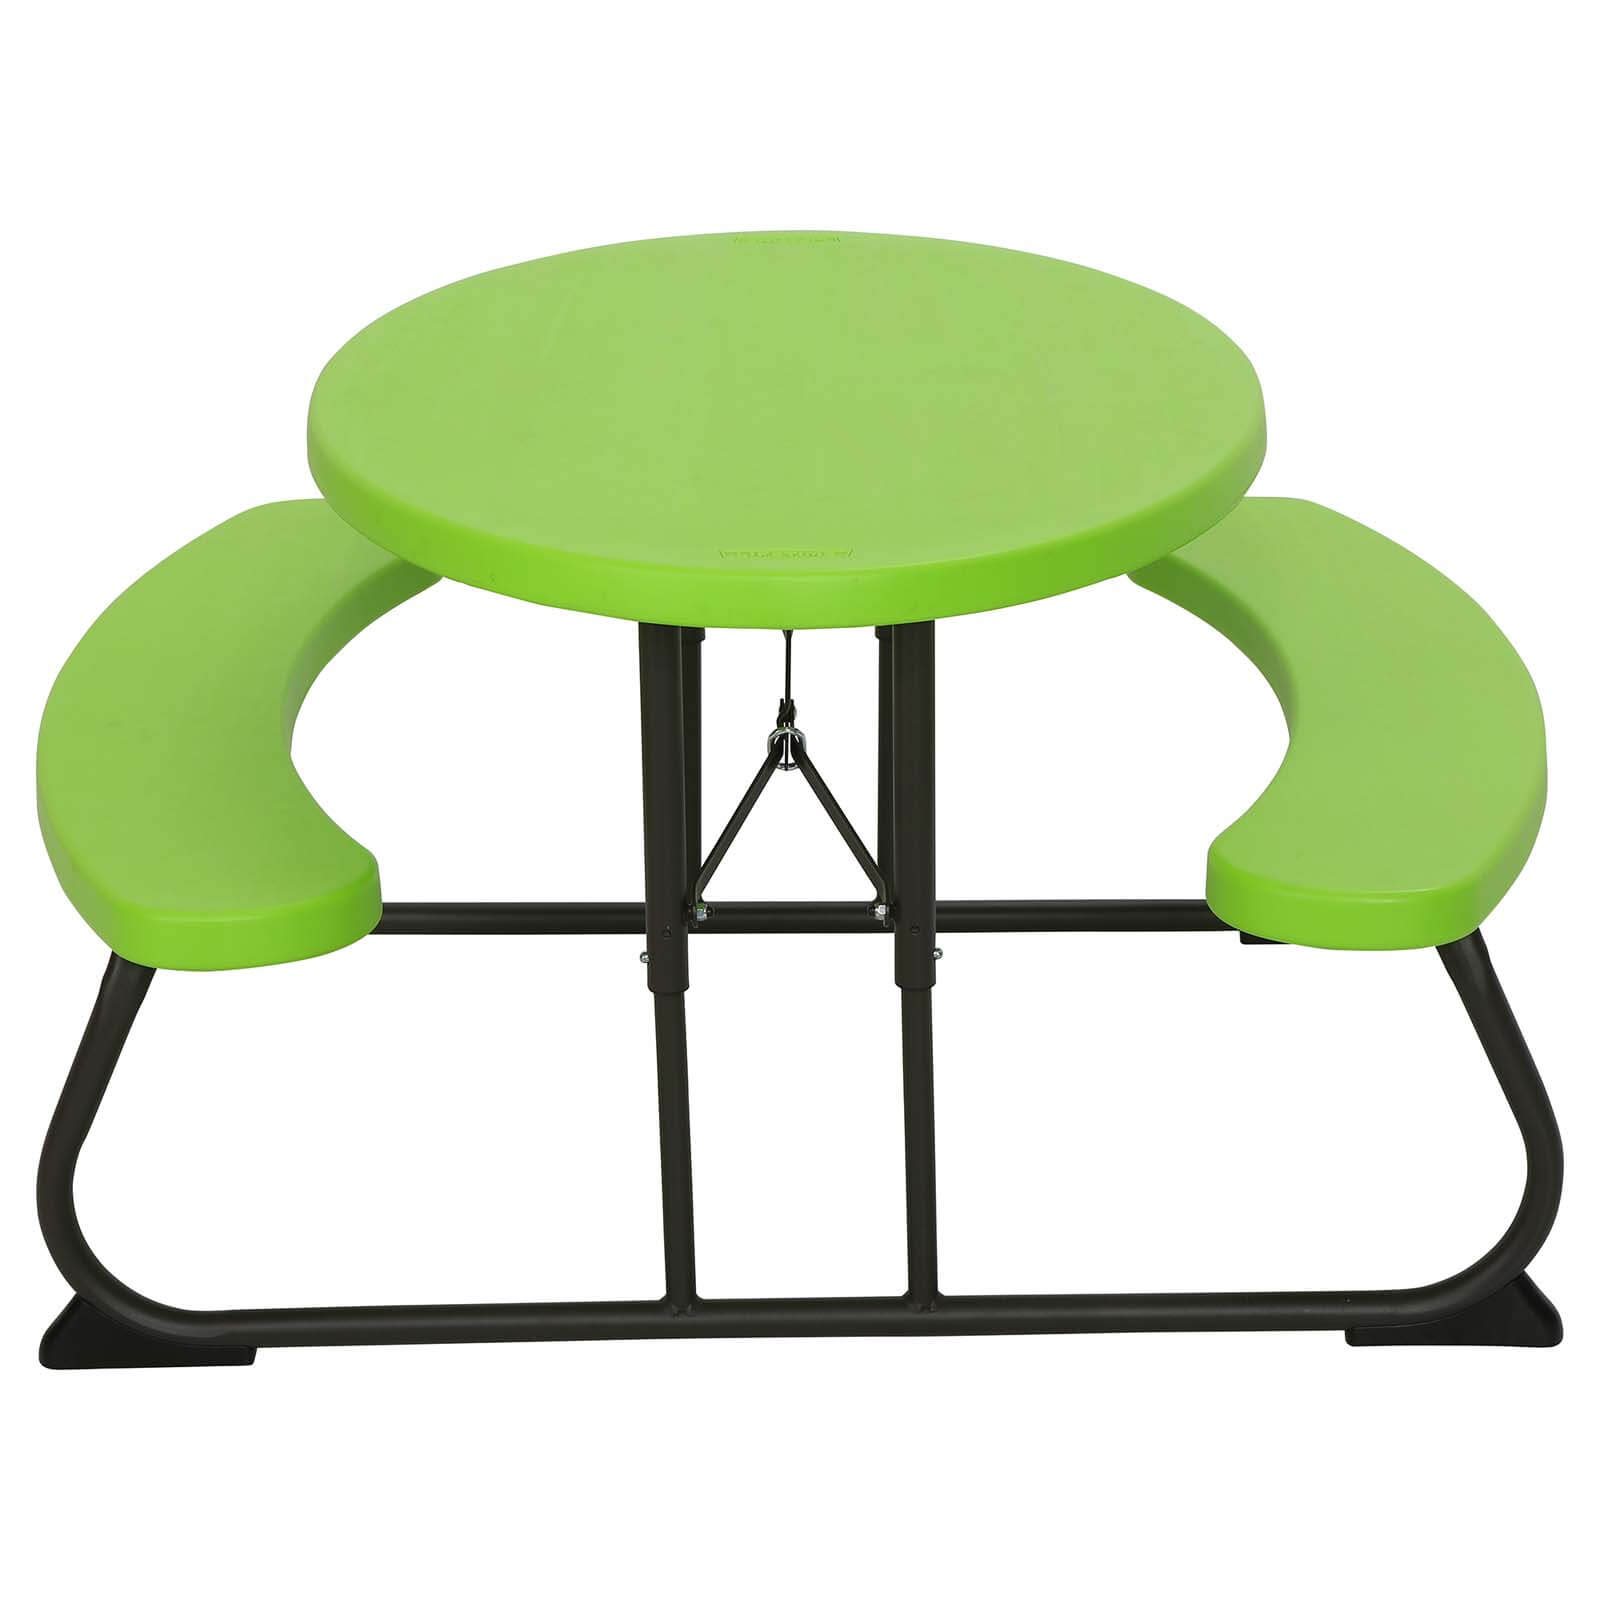 Lifetime Children's Oval Picnic Table - Lime Green